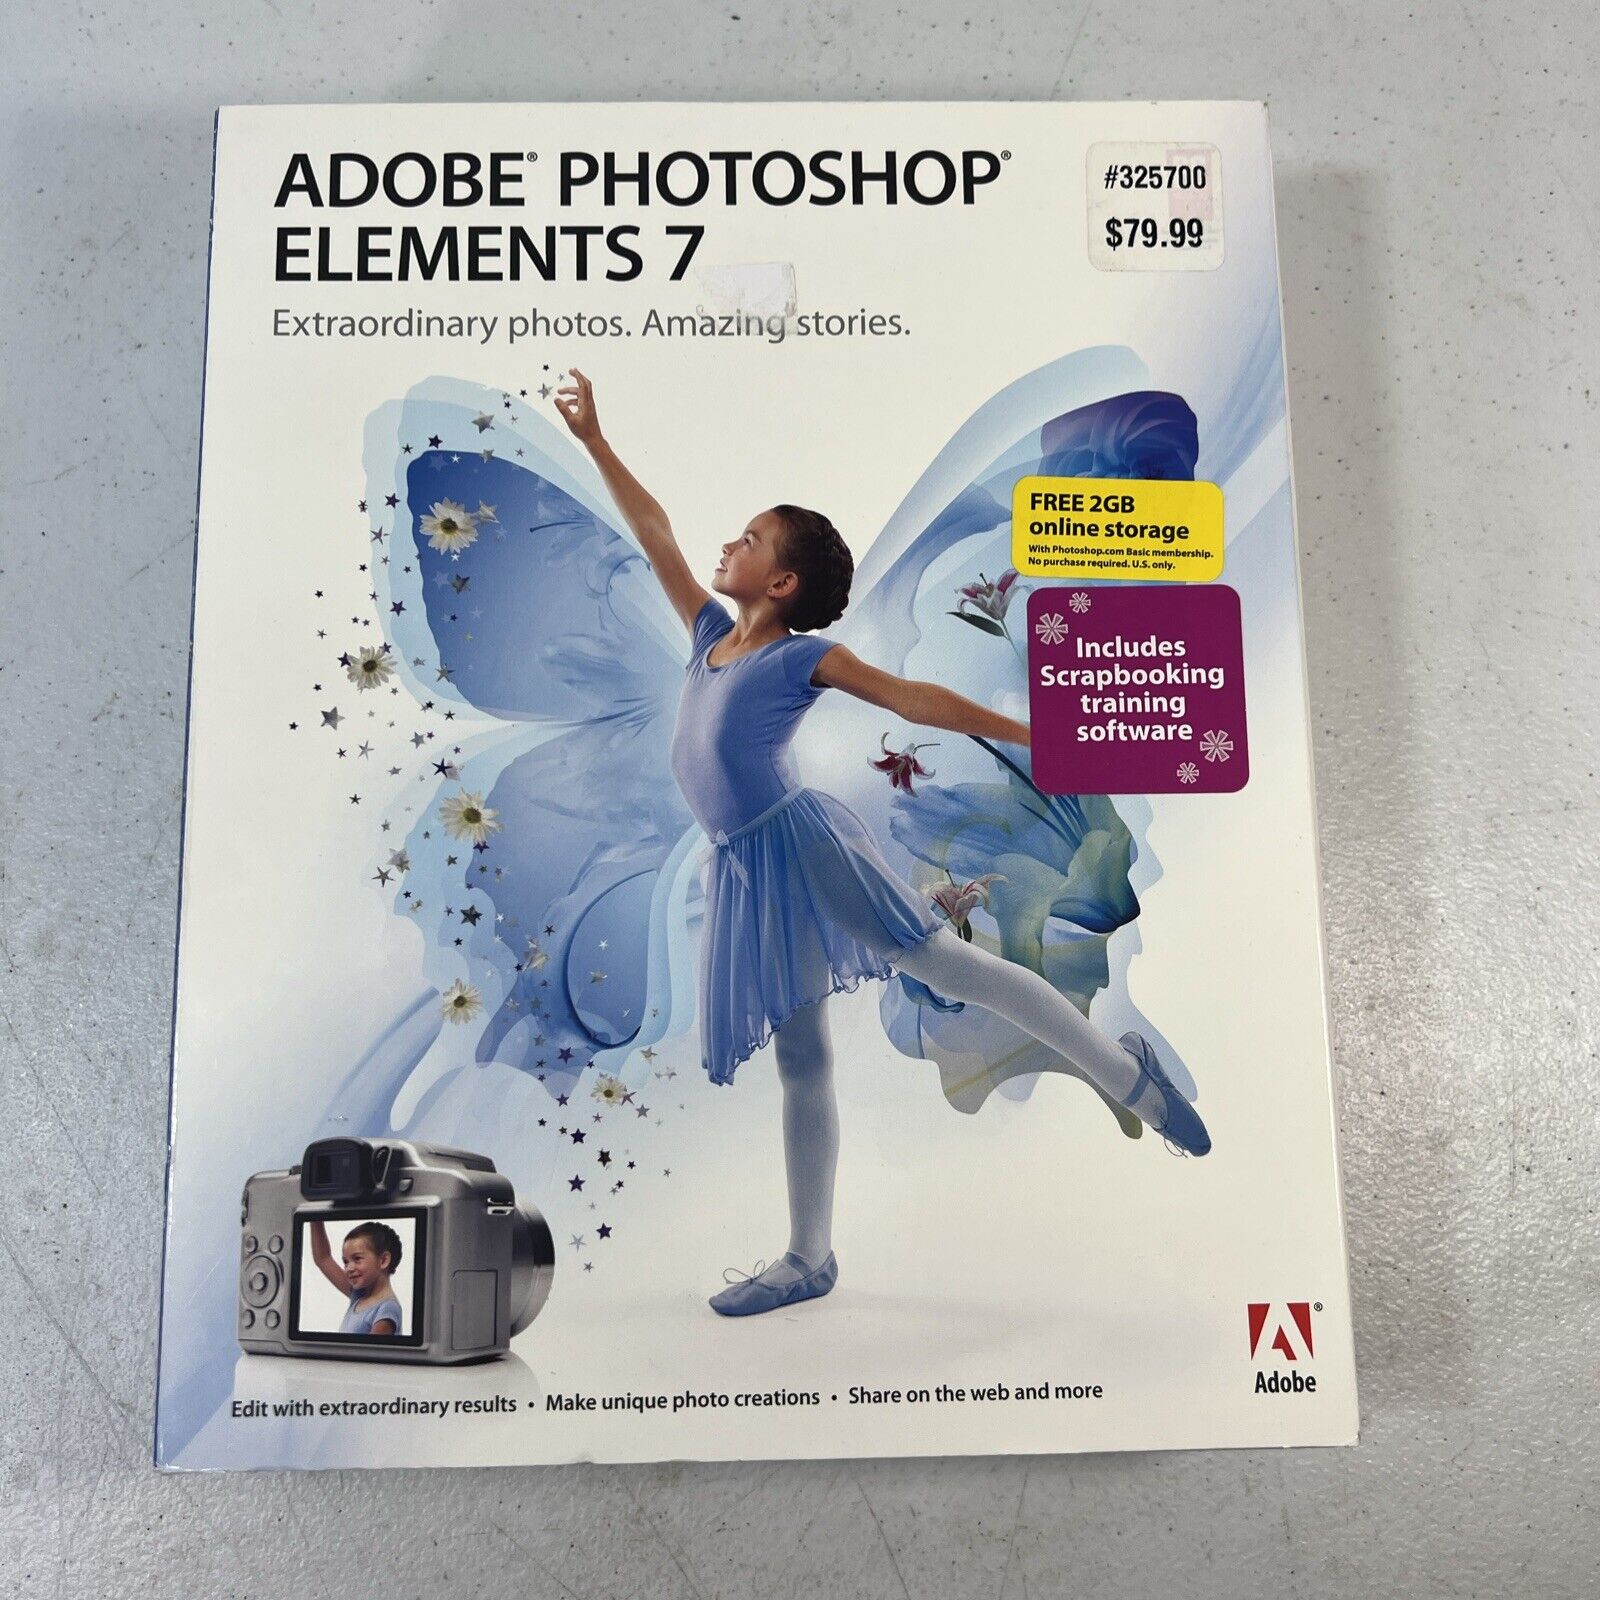 Adobe Photoshop Elements 7 CD ROM CIB Big Box (Brand NEW, Factory Sealed)